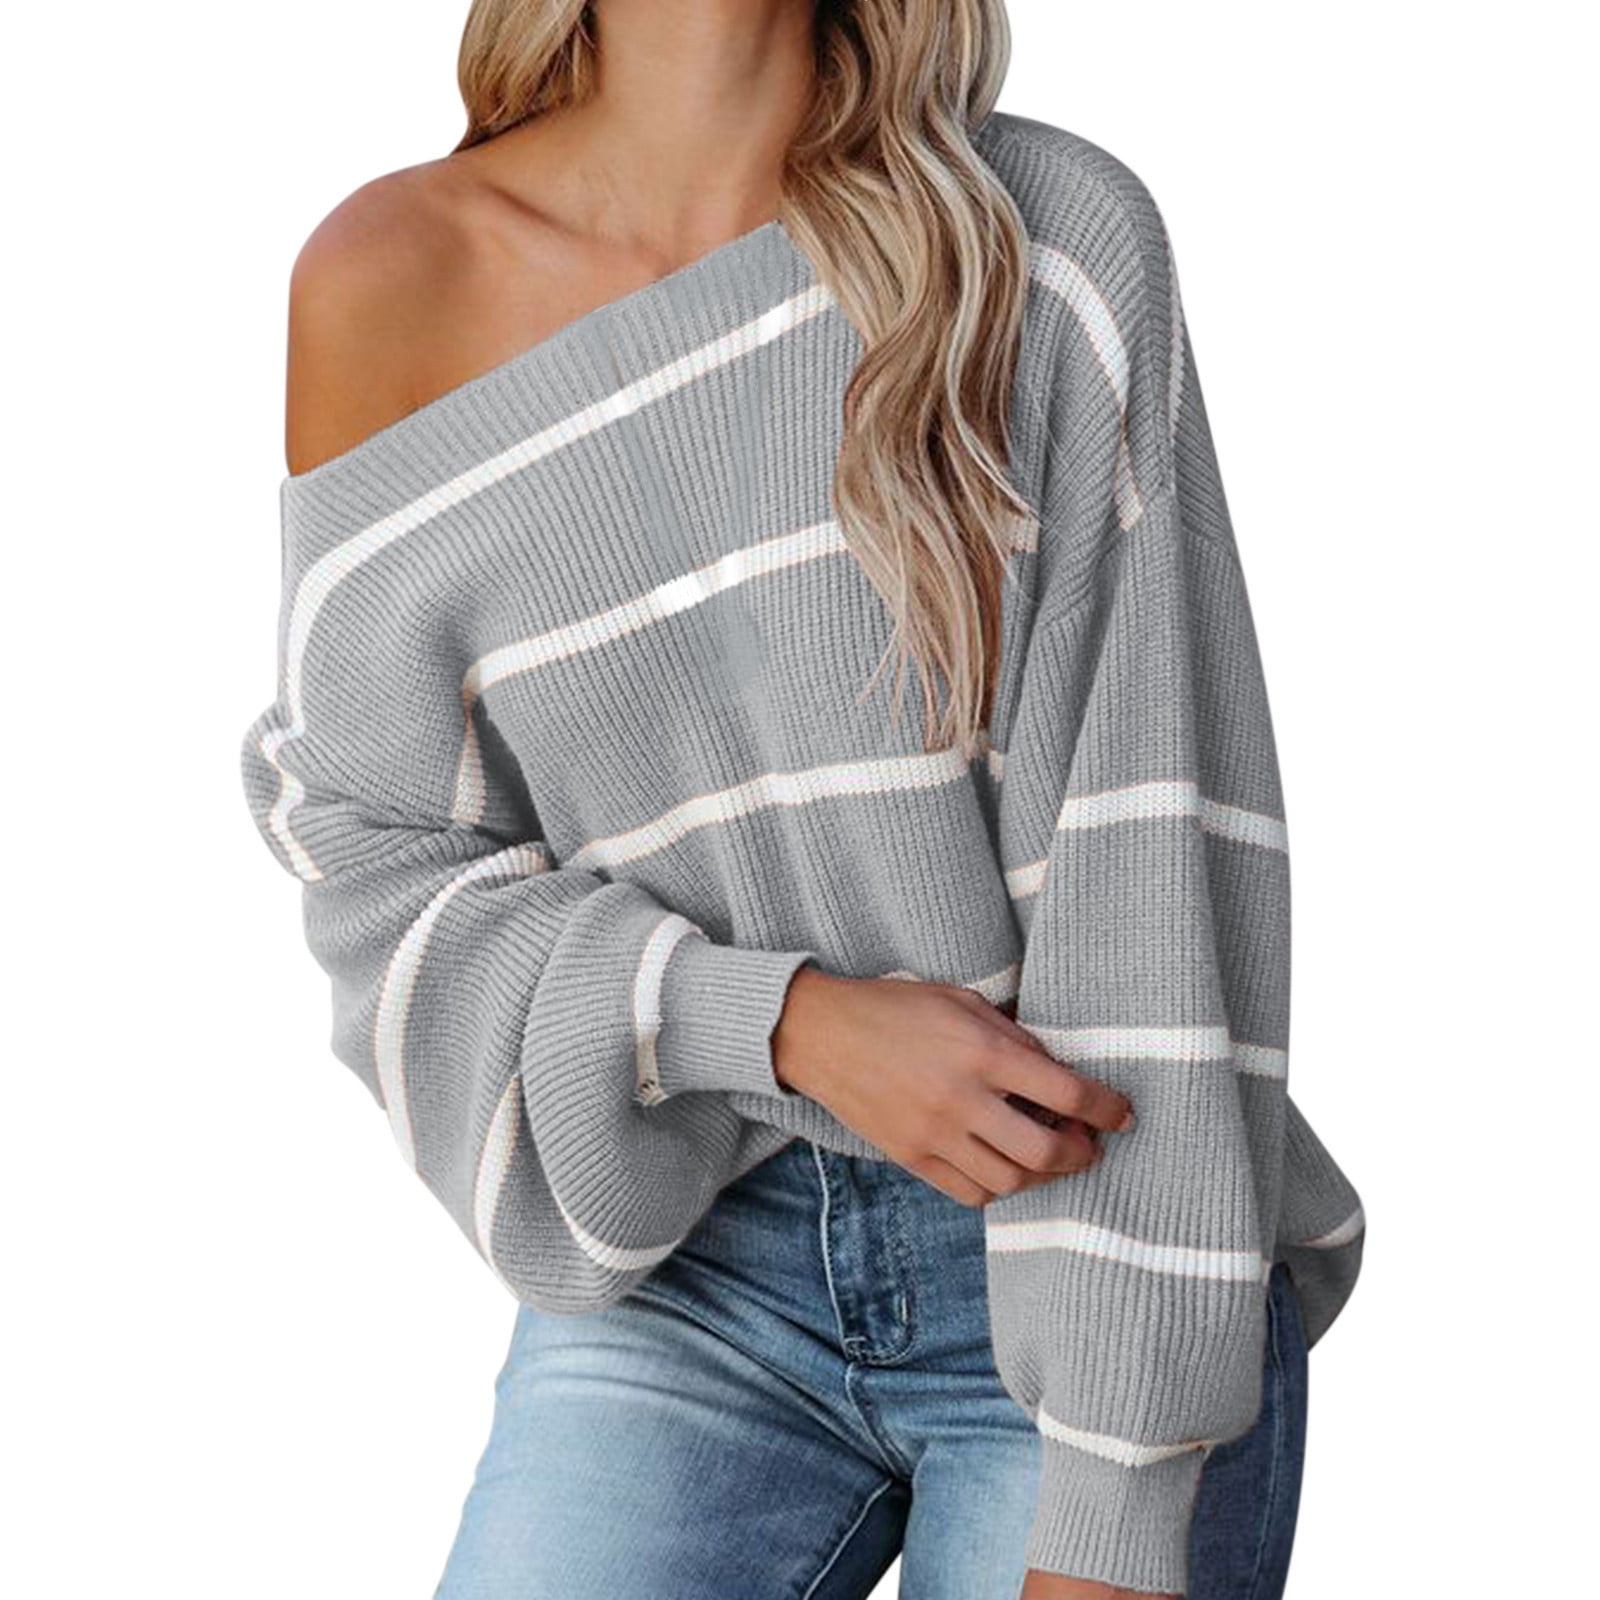 YEMAK Women's Pullover Sweater Long Sleeve Crewneck Heart Knitted Top